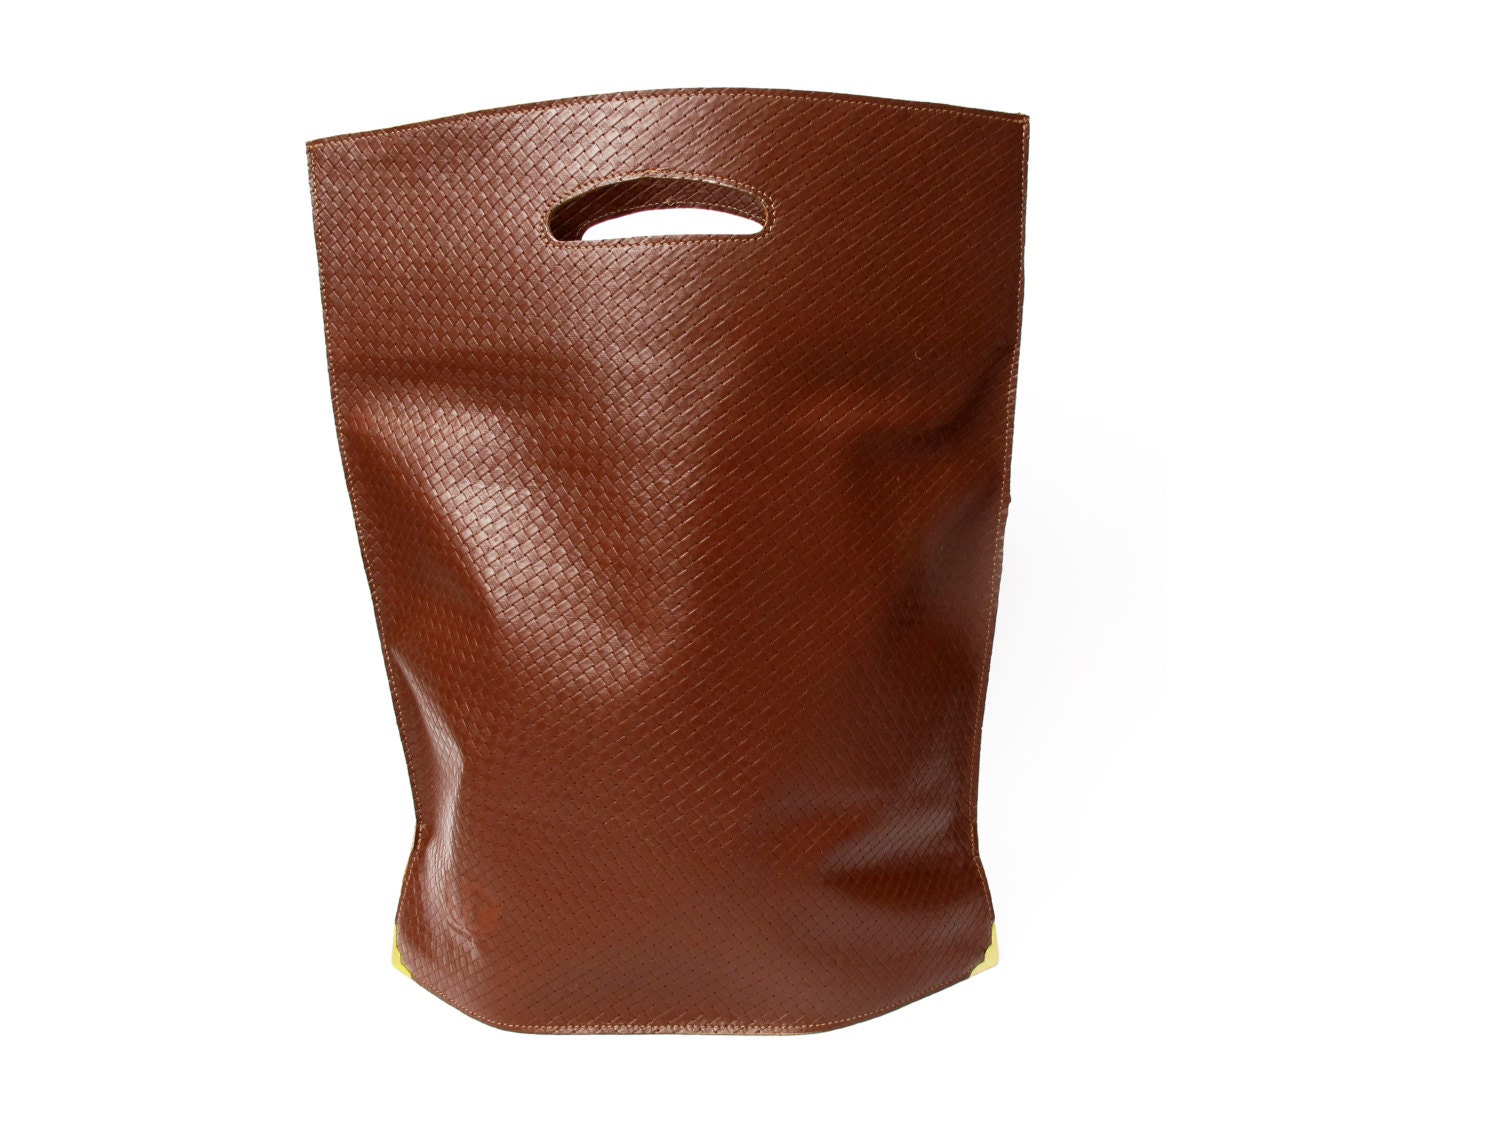 Woven brown leather handbag foldover purse Black Friday SALE | Etsy